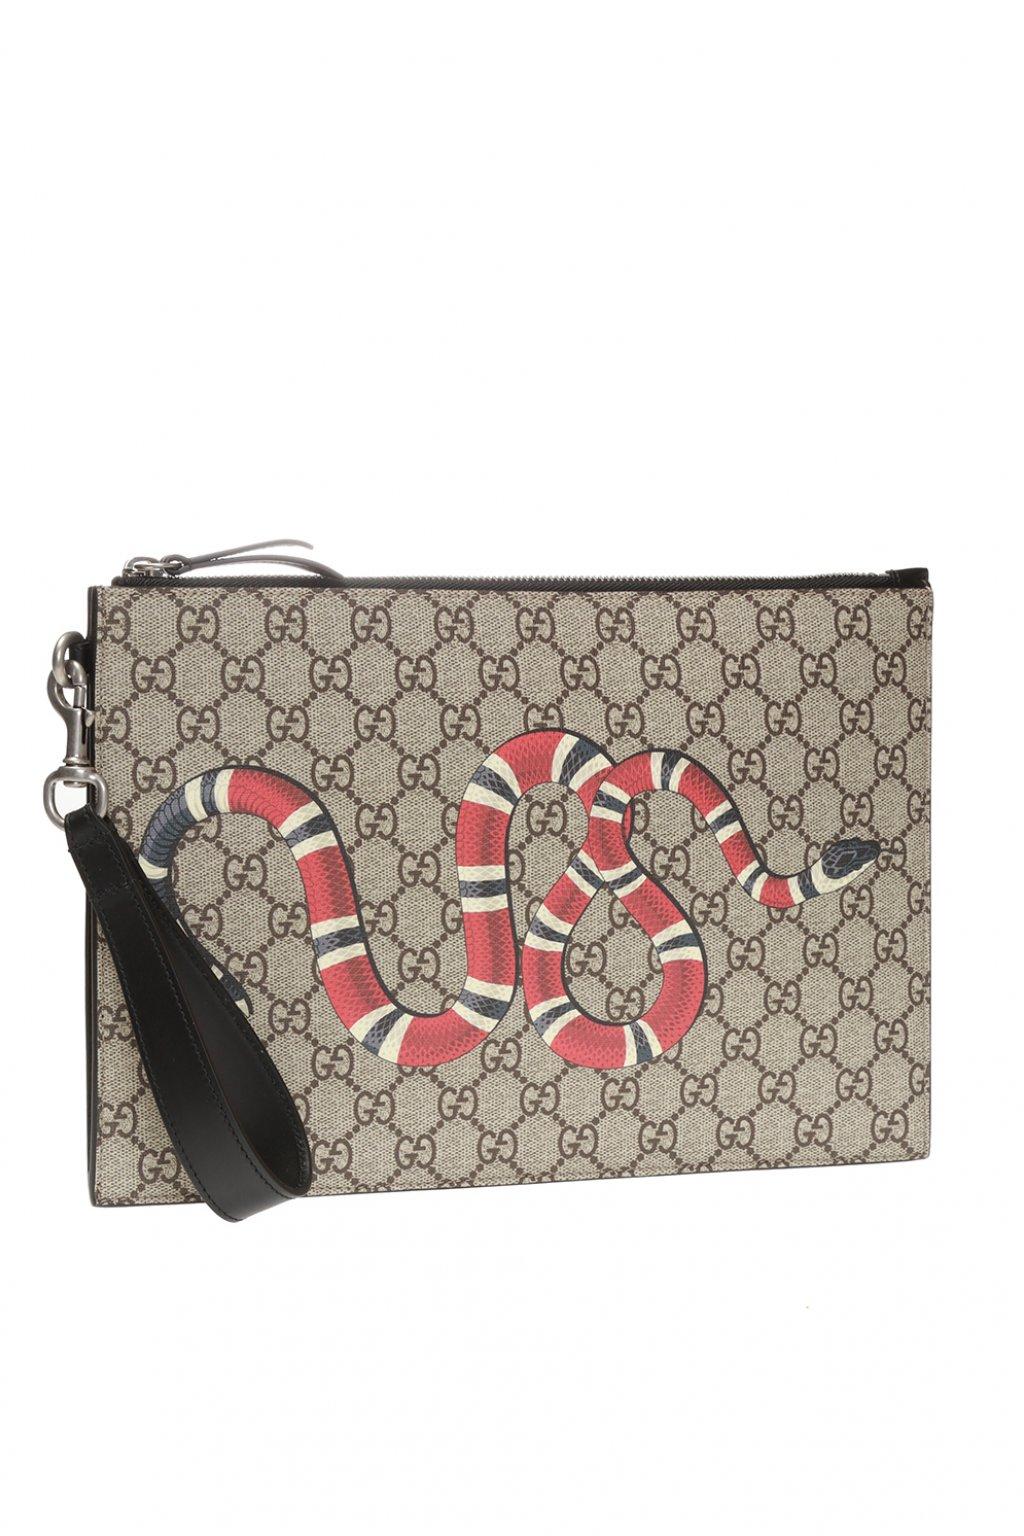 Gucci Diana mini python tote bag in Neutral Precious Skins | GUCCI® SI